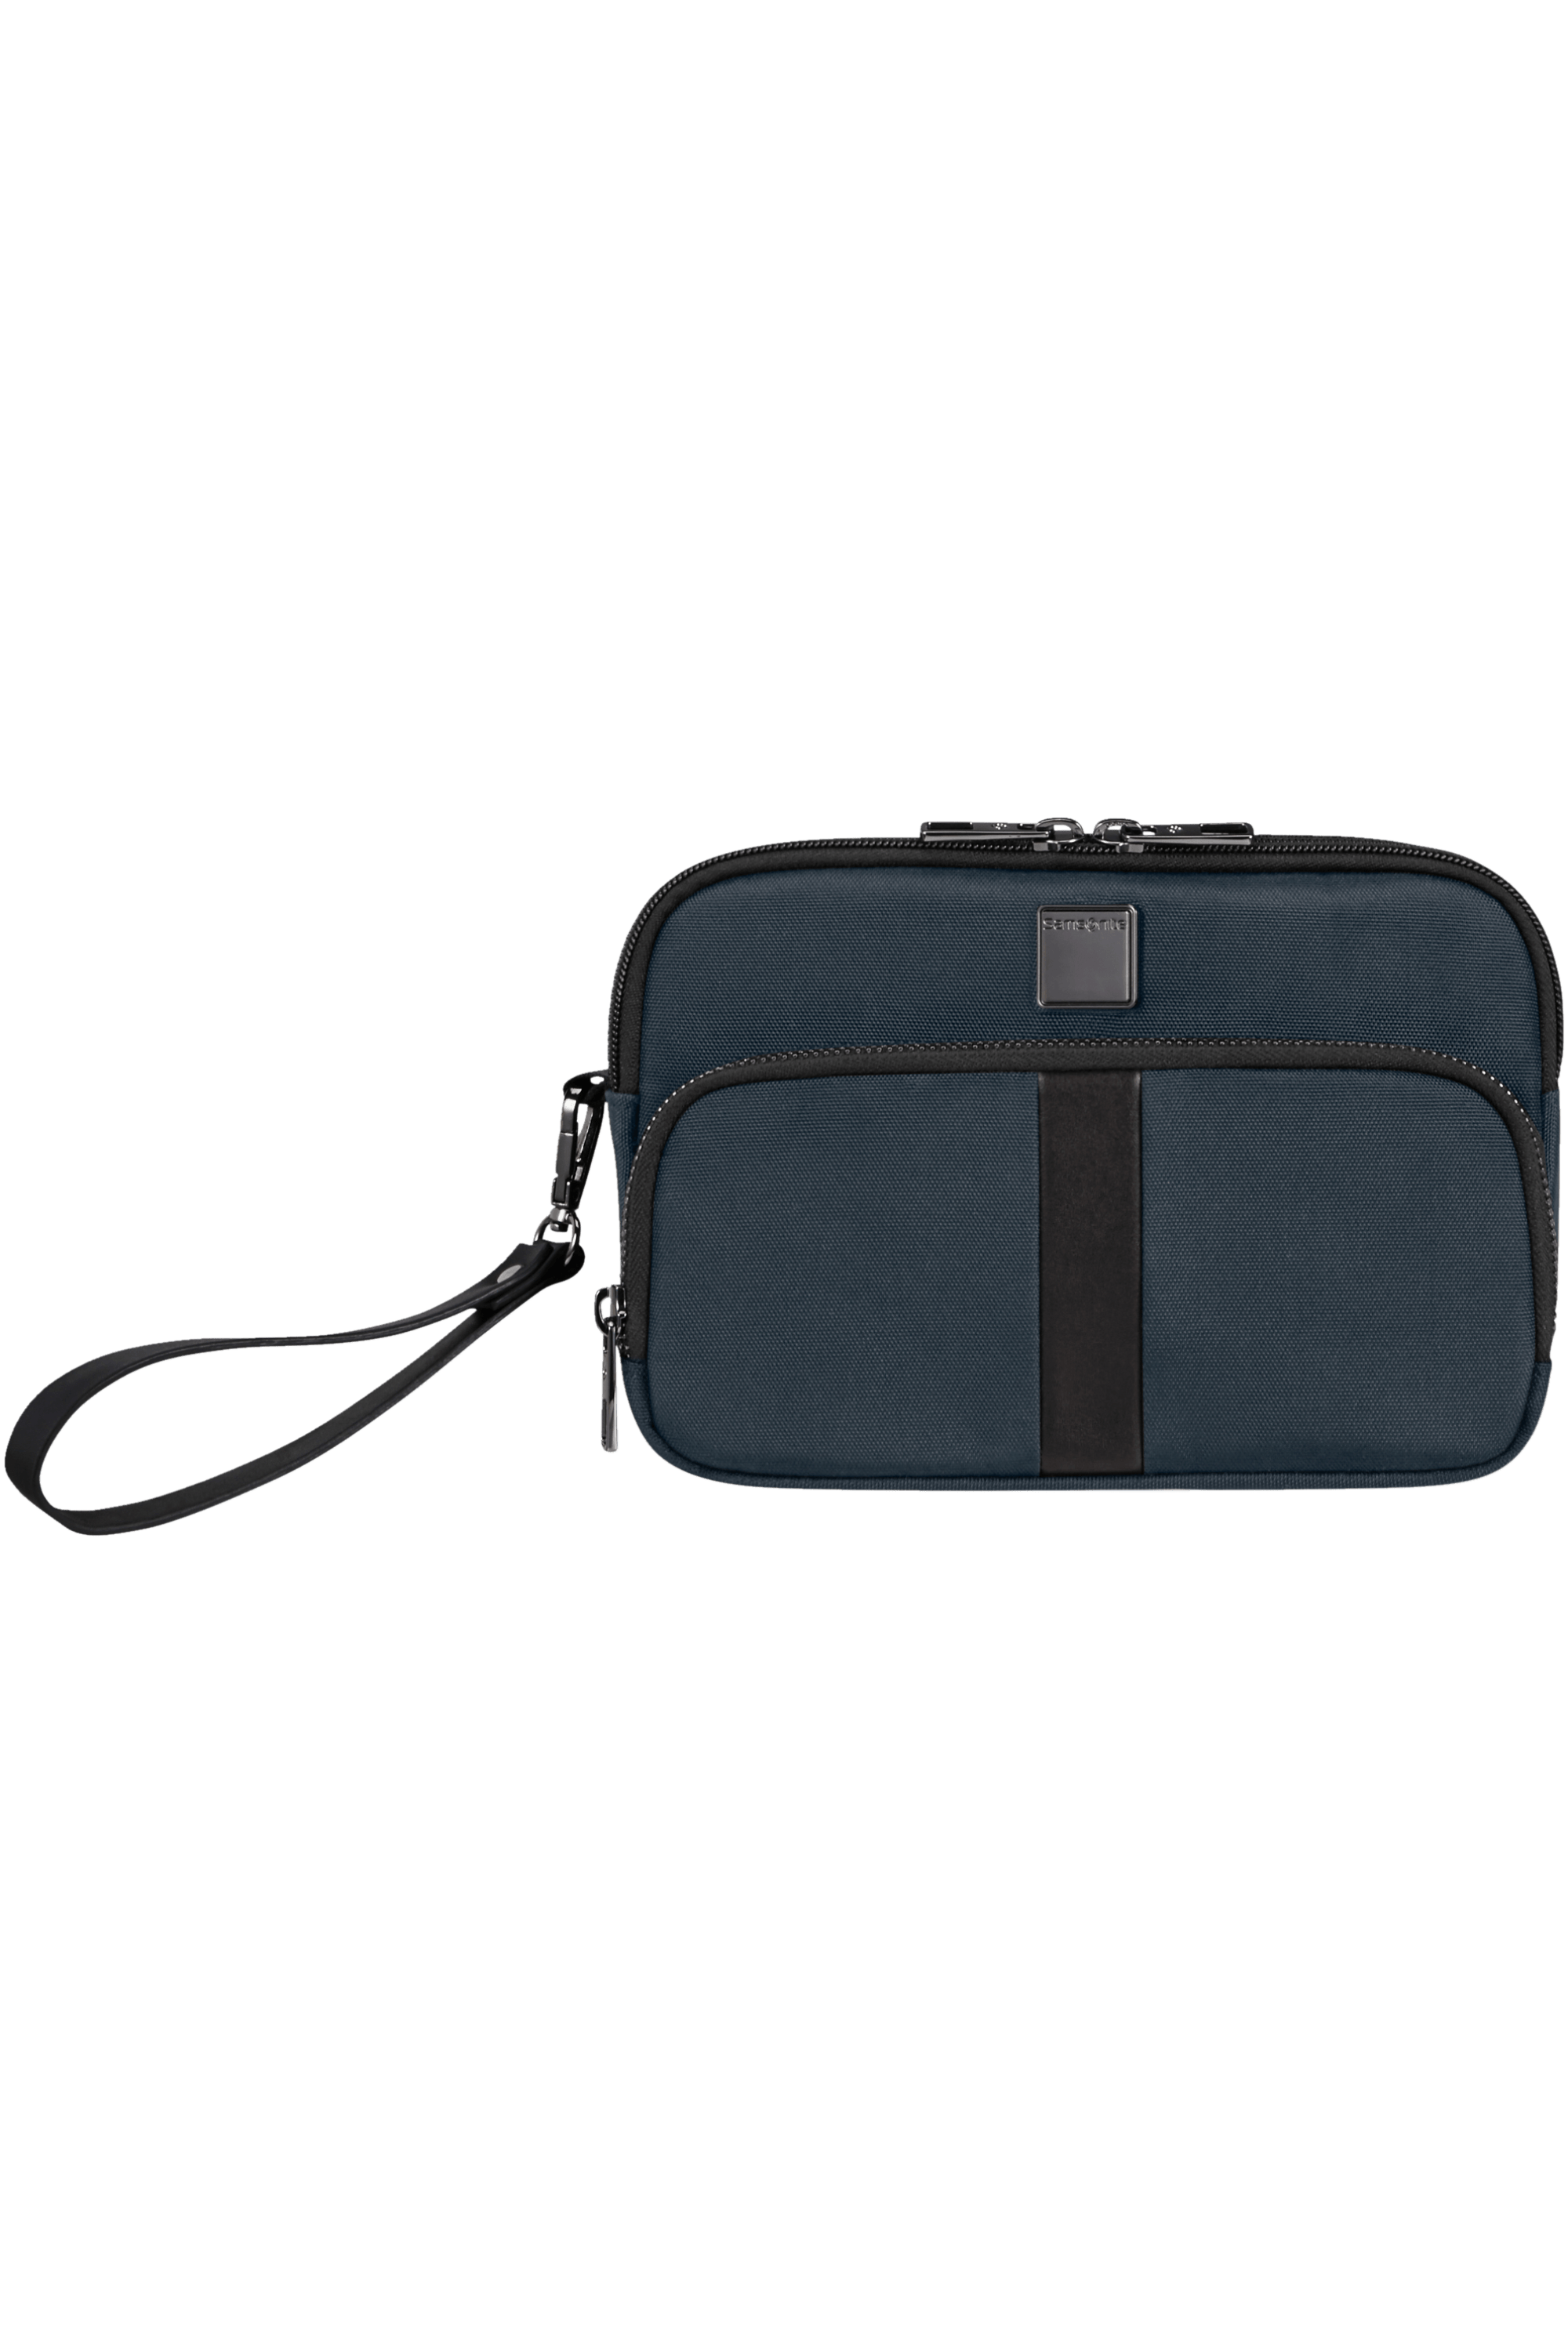 Sacksquare Clutch Bag | Samsonite UK